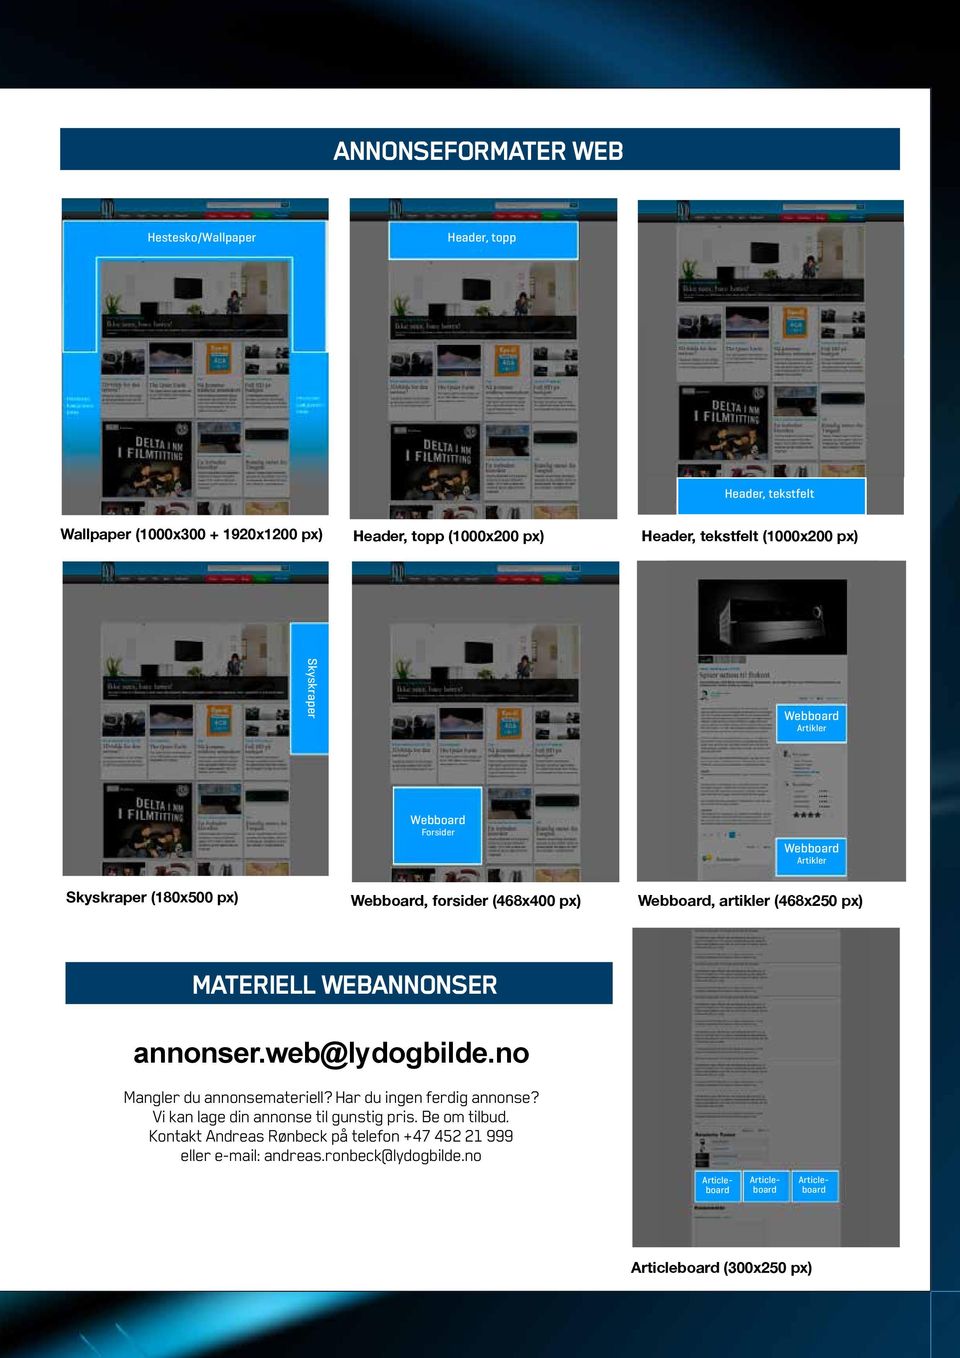 (468x250 px) MATERIELL WEBANNONSER annonser.web@lydogbilde.no Mangler du annonsemateriell? Har du ingen ferdig annonse?